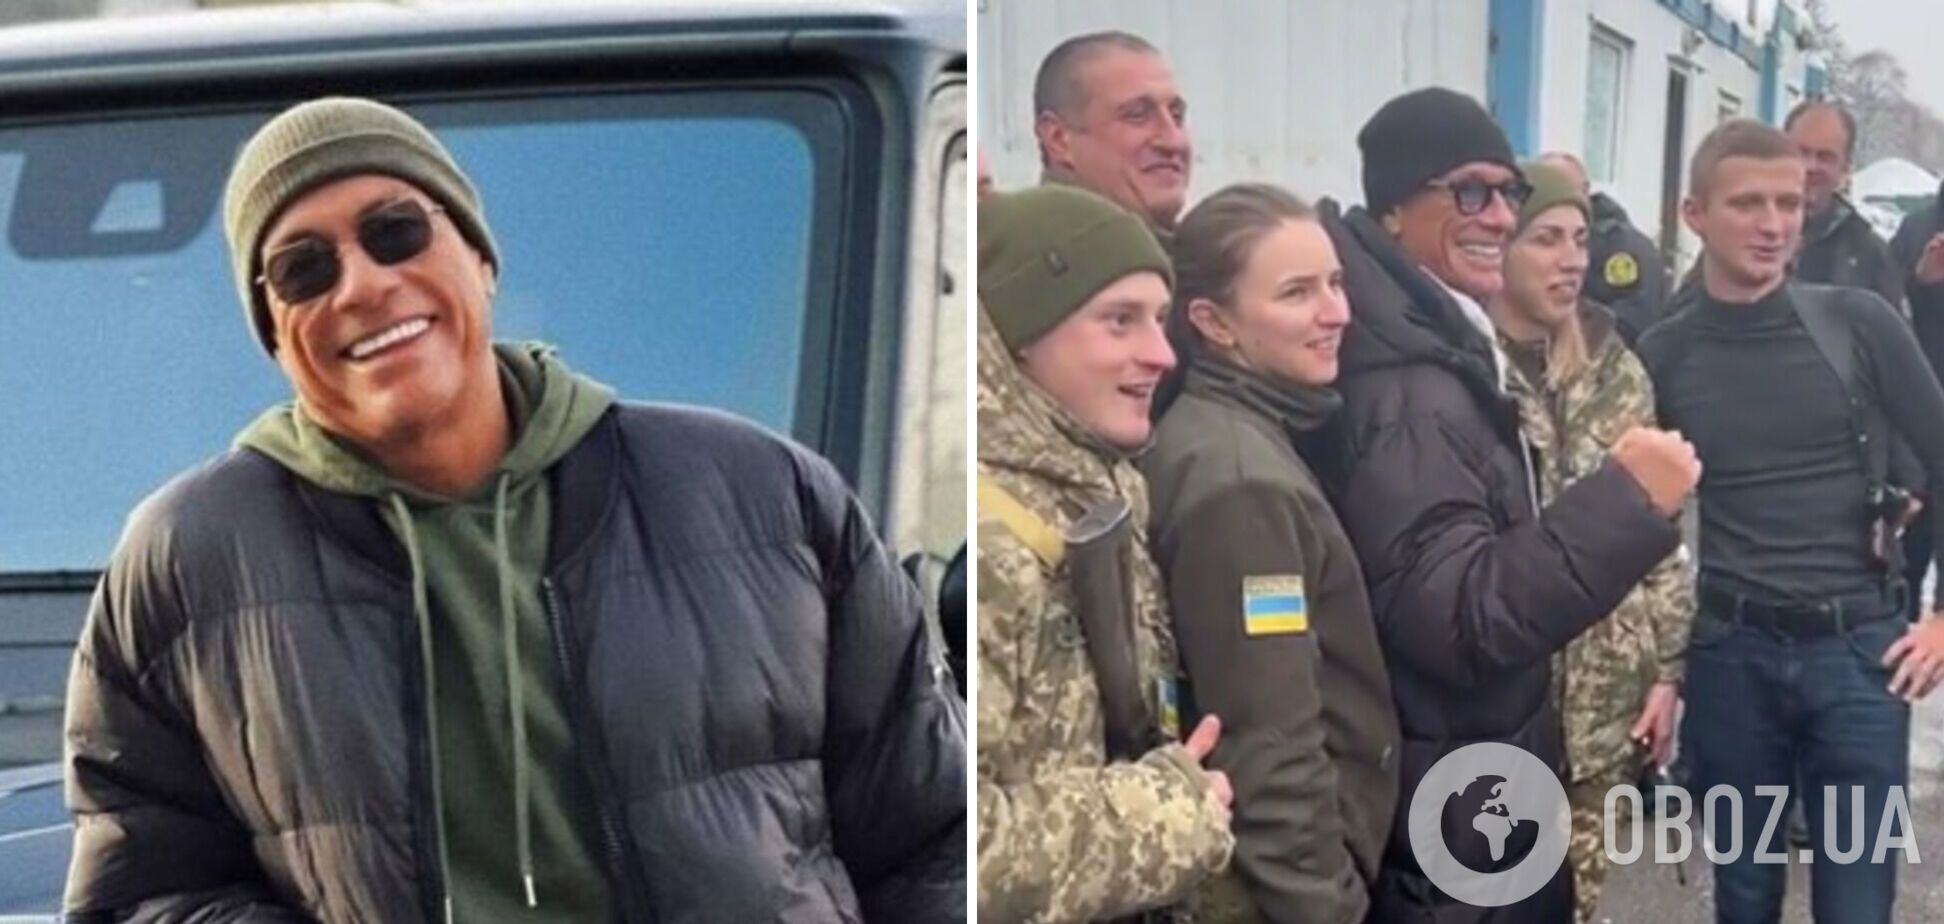 Звезда Голливуда Жан-Клод Ван Дамм встретился с украинскими пограничниками и поздравил их лозунгом 'Слава Украине'. Видео